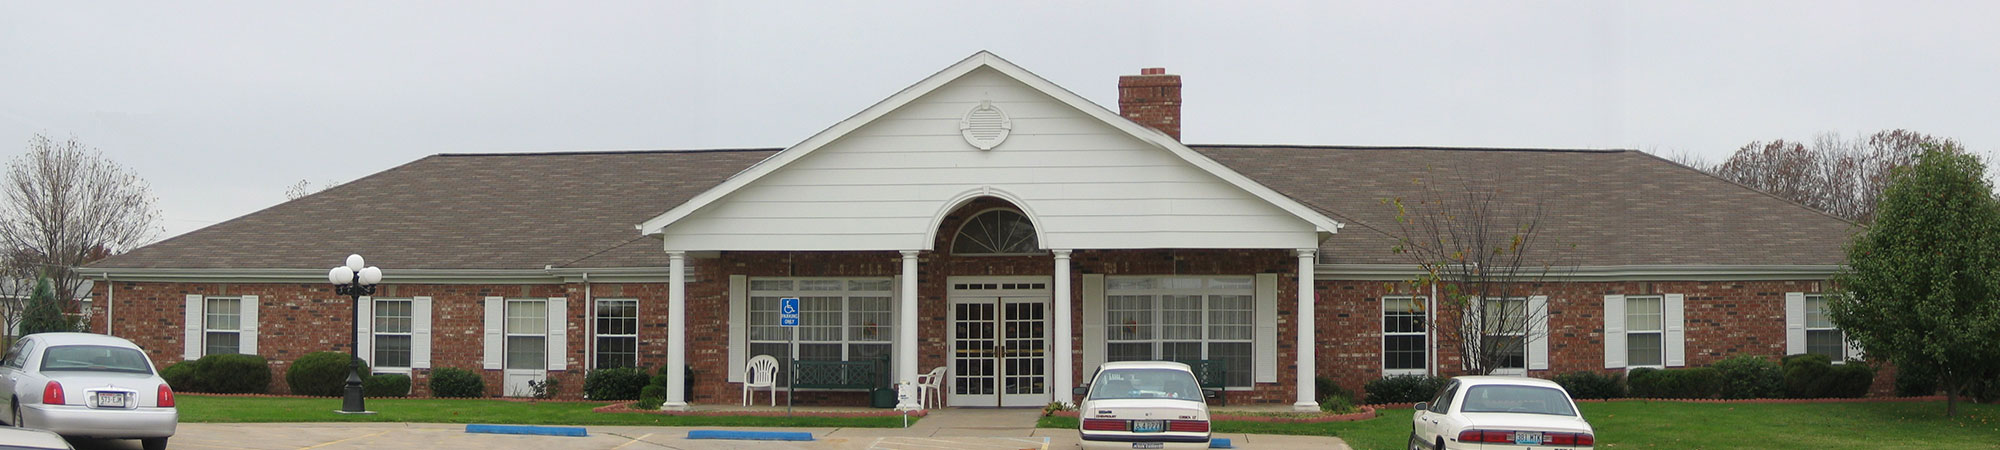 Mount Vernon Care Center image